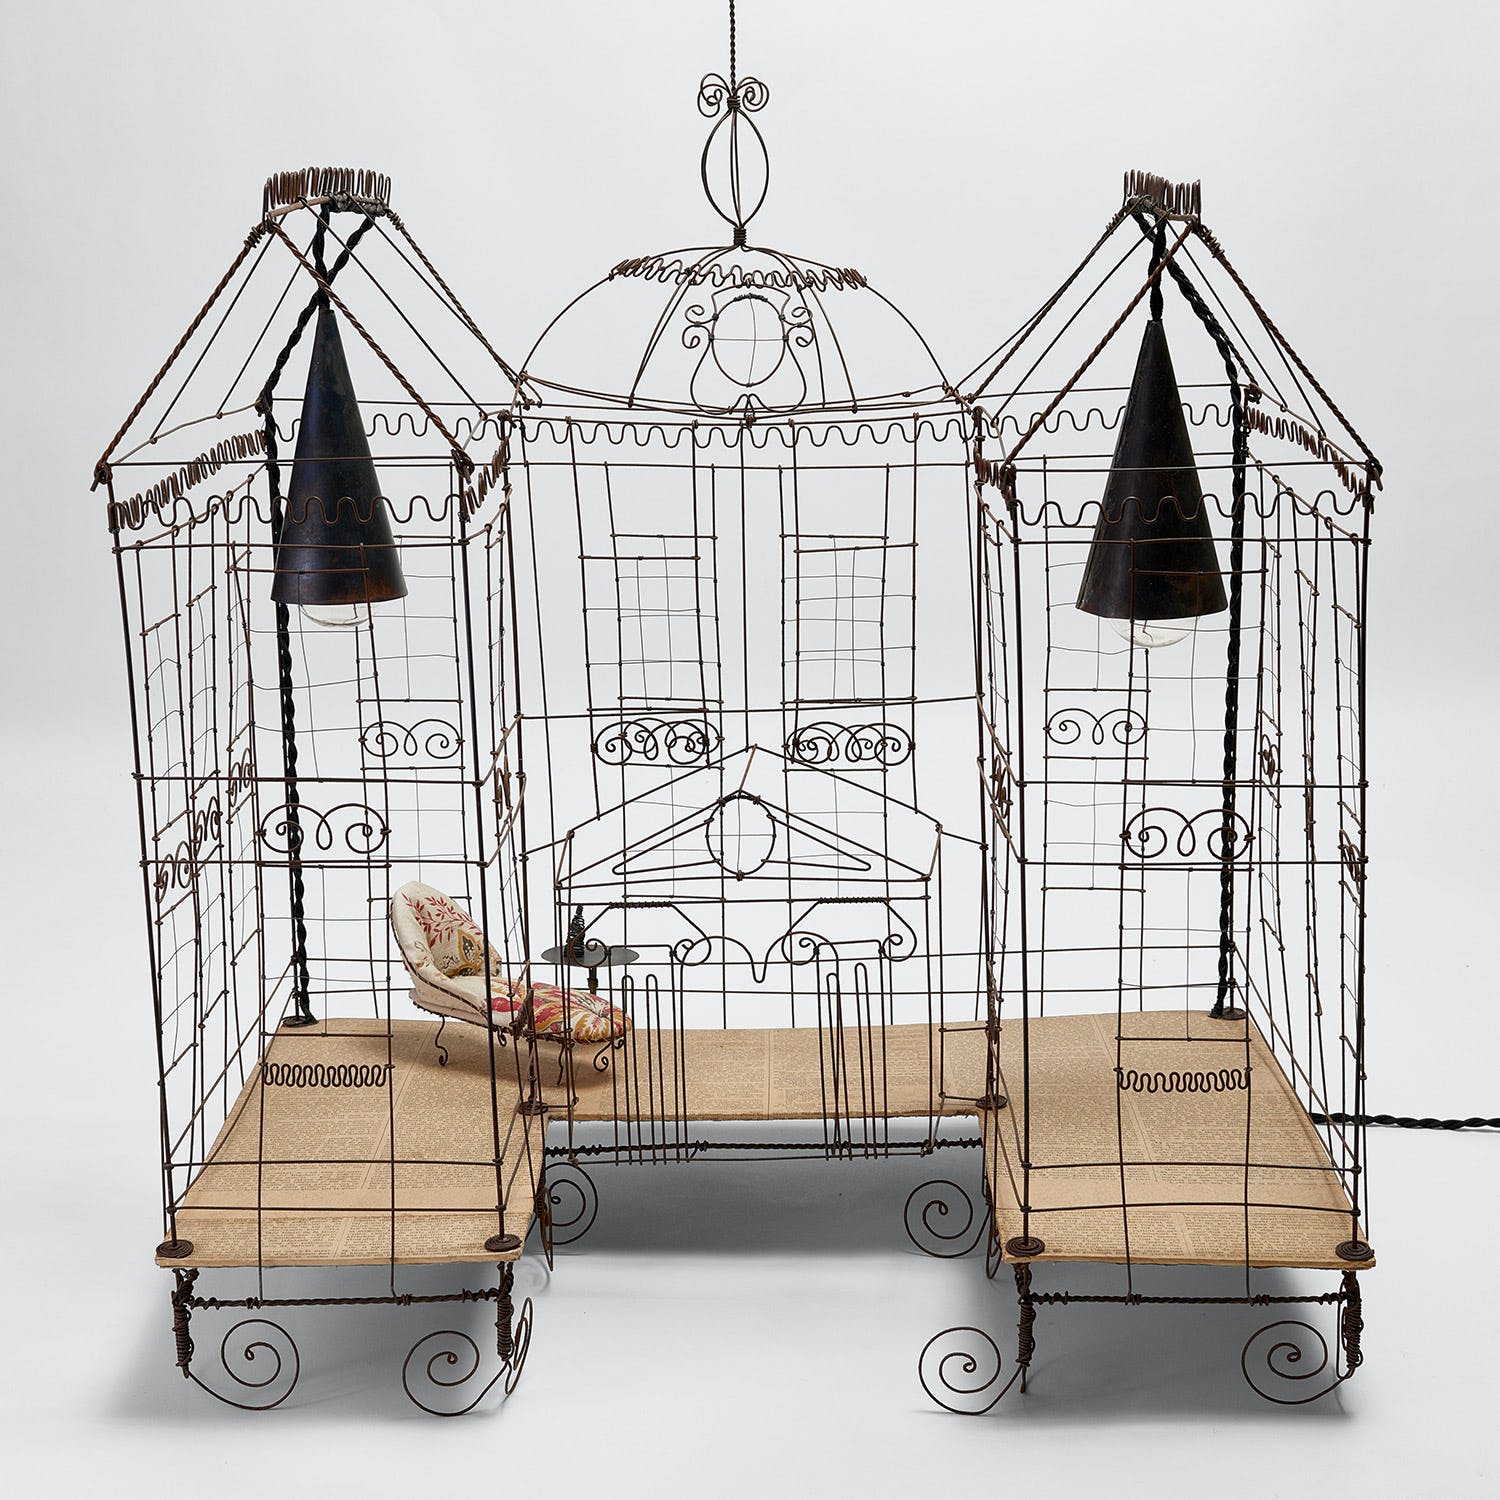 Elaborately designed, ornate birdcage resembling a miniature palace or house.